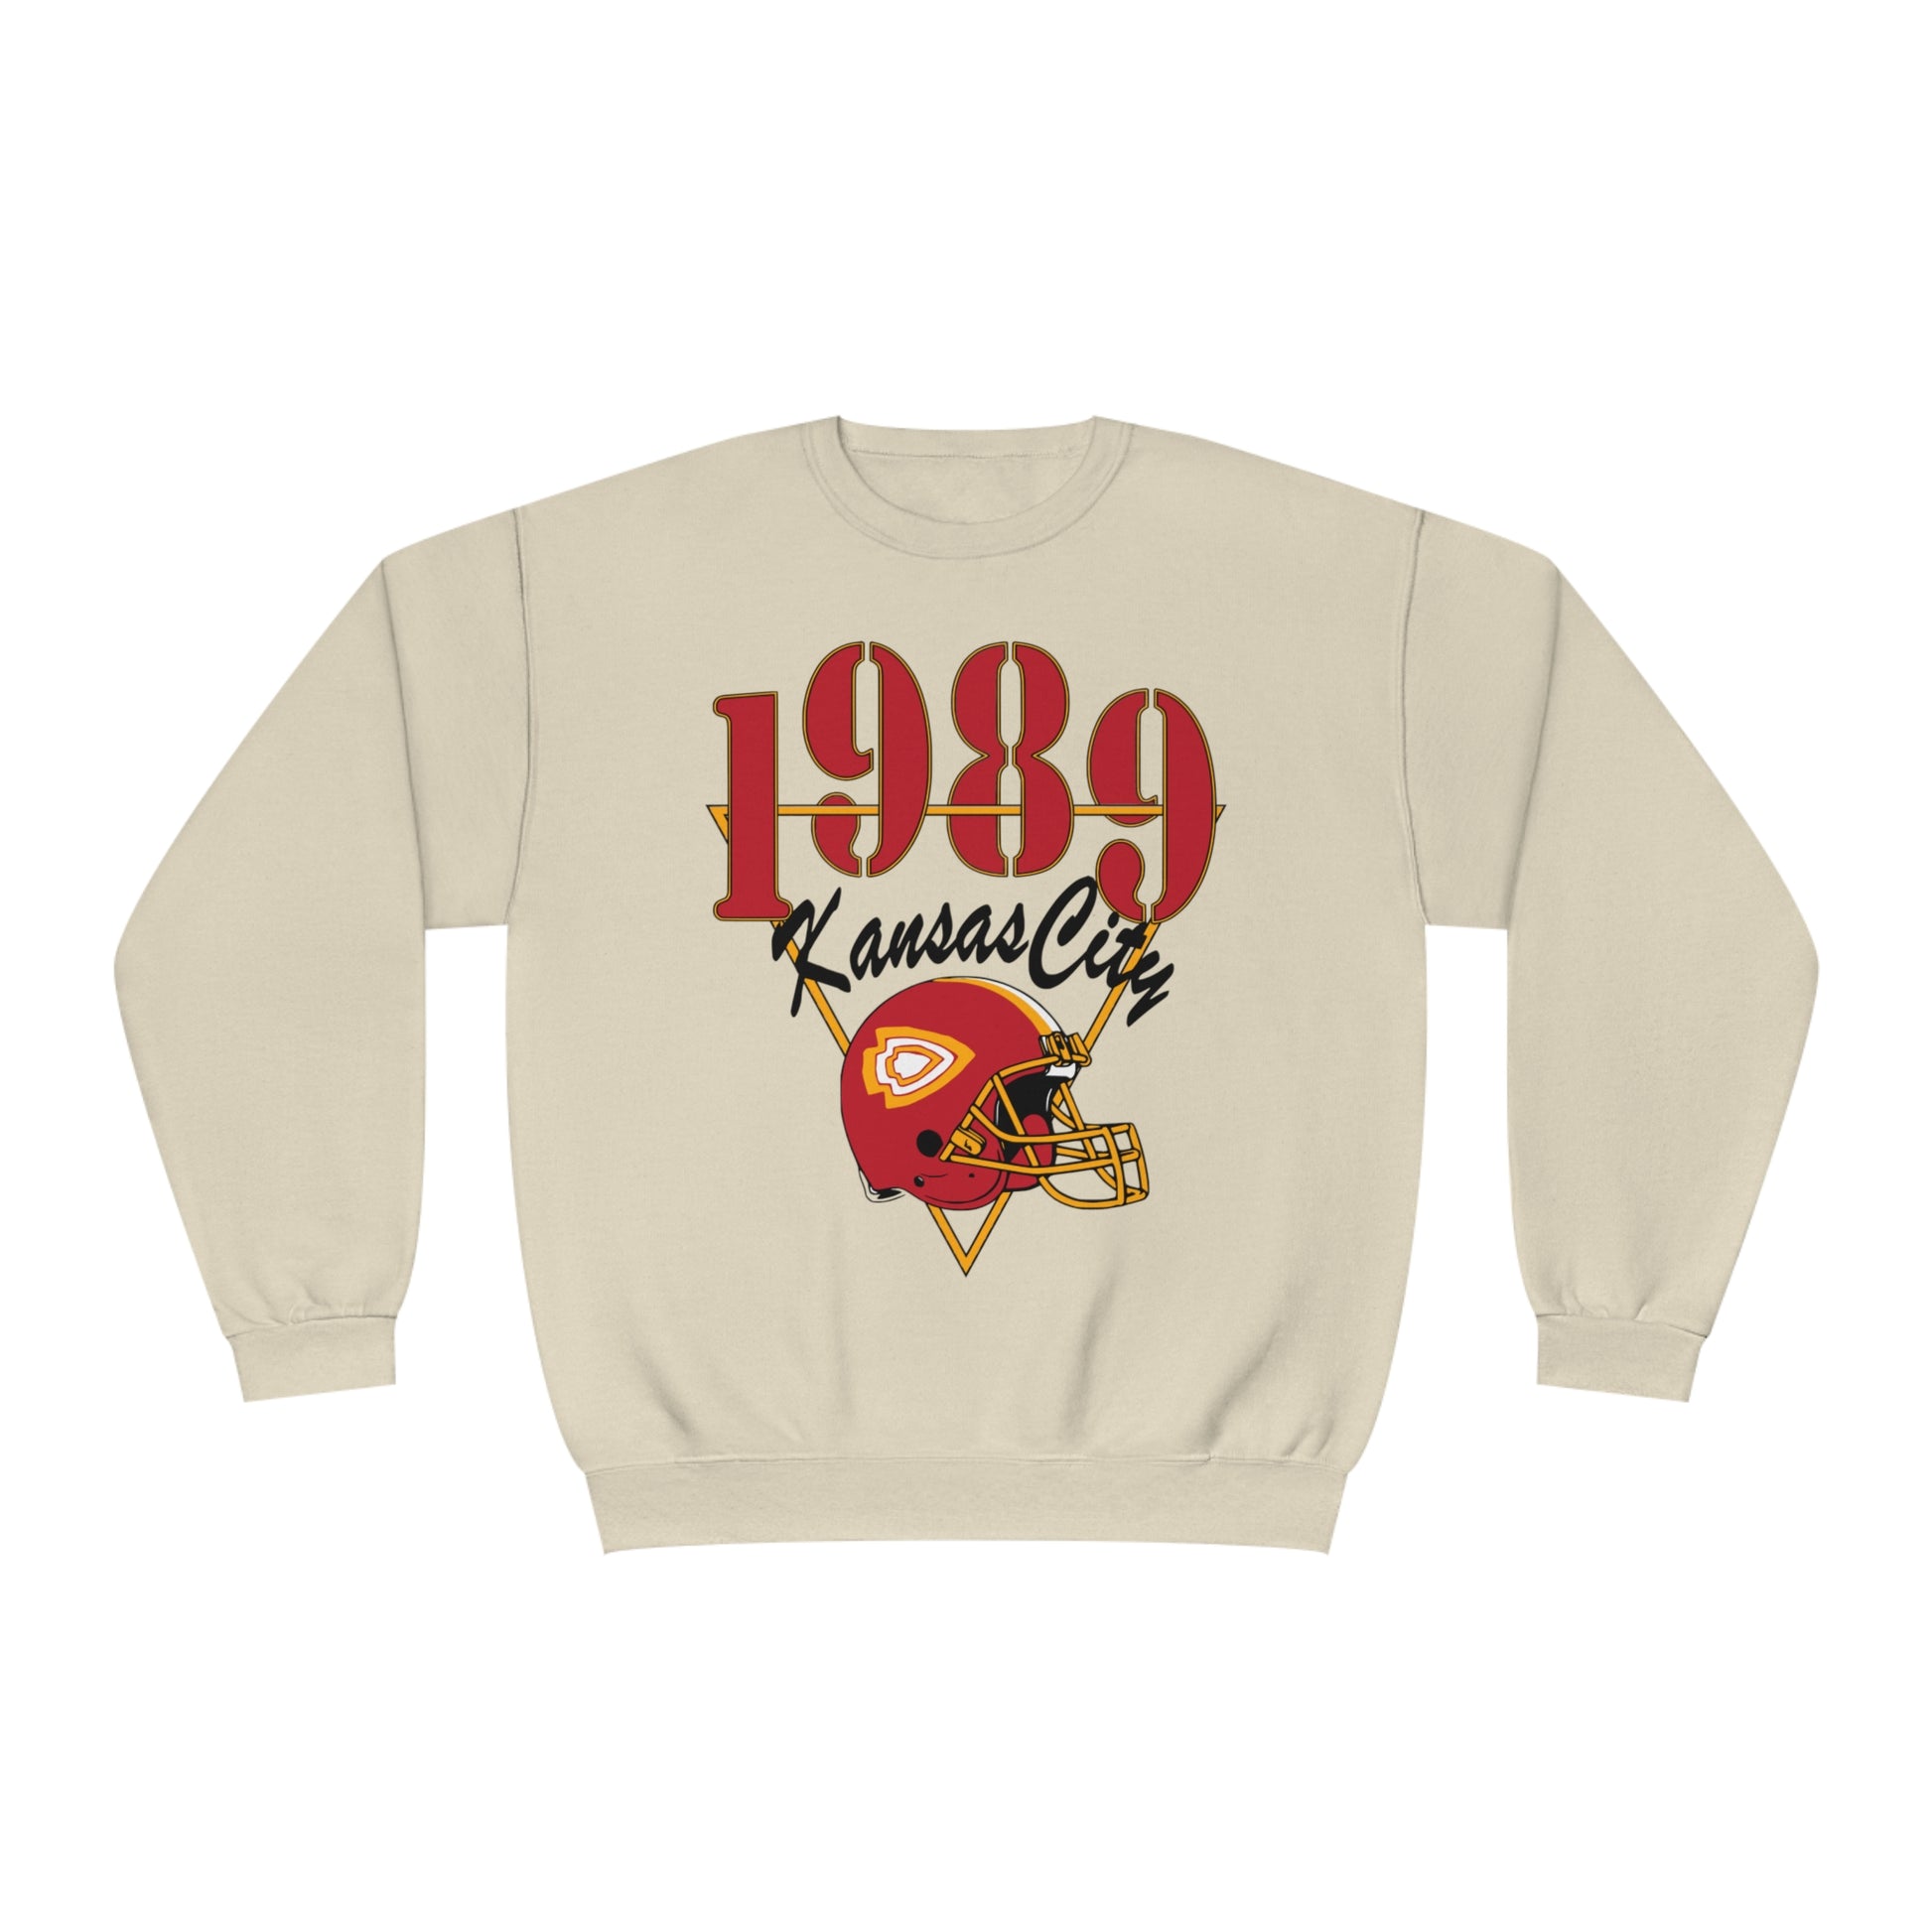 1989 Kansas City Chiefs Football Crewneck Sweatshirt - Vintage Retro Arrowhead Style - 1989 Version Chiefs Beige Crewneck Sweatshirt Taylor Swift